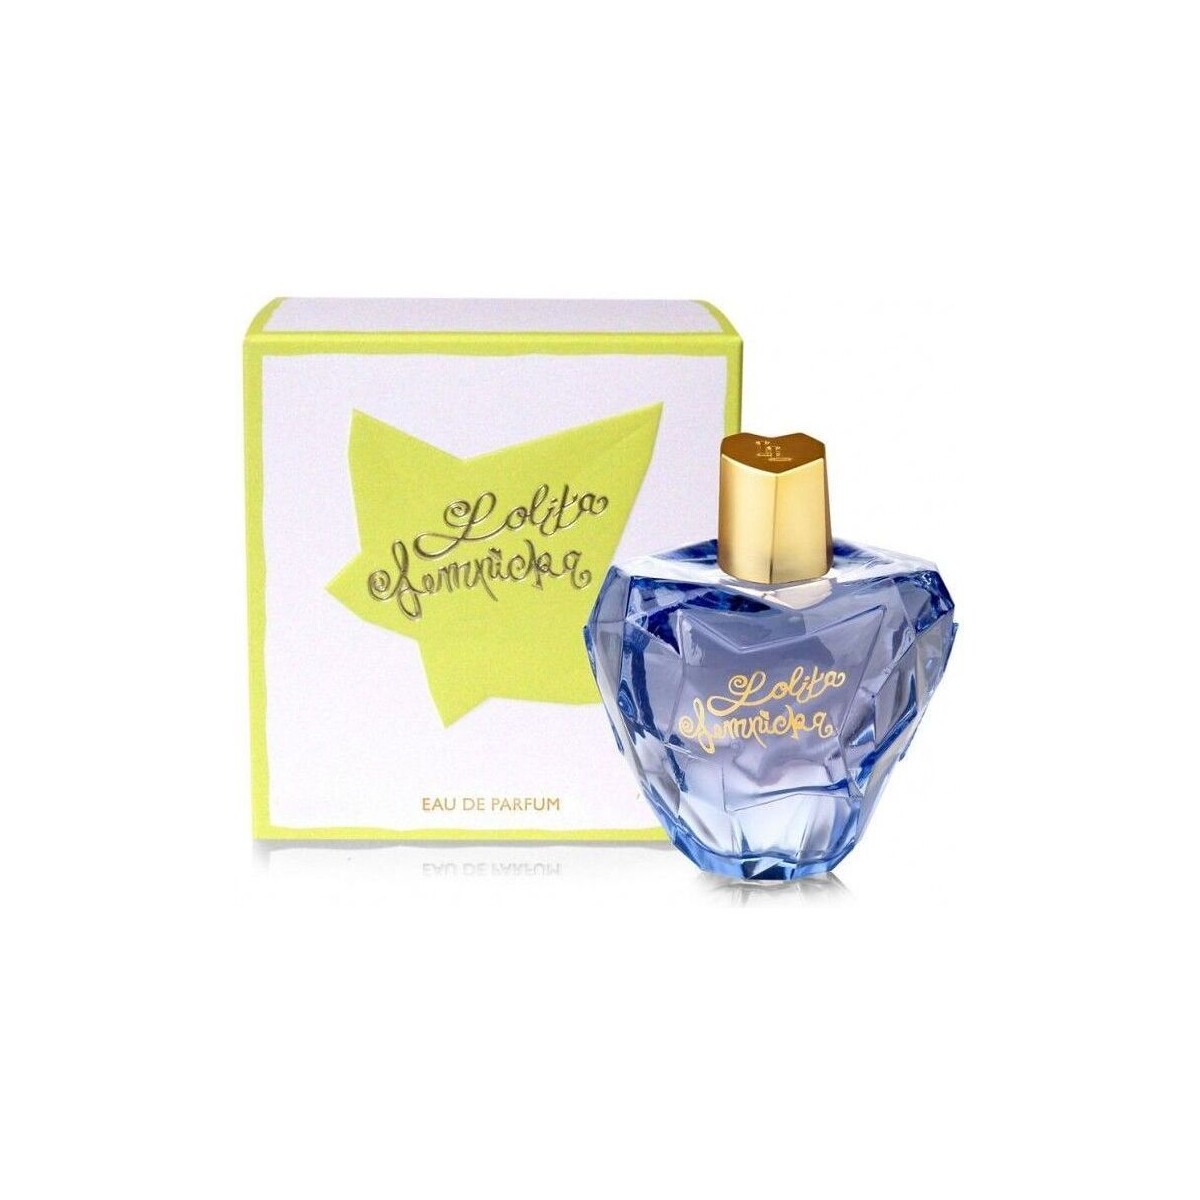 Beauté Femme Stones and Bones - eau de parfum - 100ml - vaporisateur Lolita Lempicka  - perfume - 100ml - spray